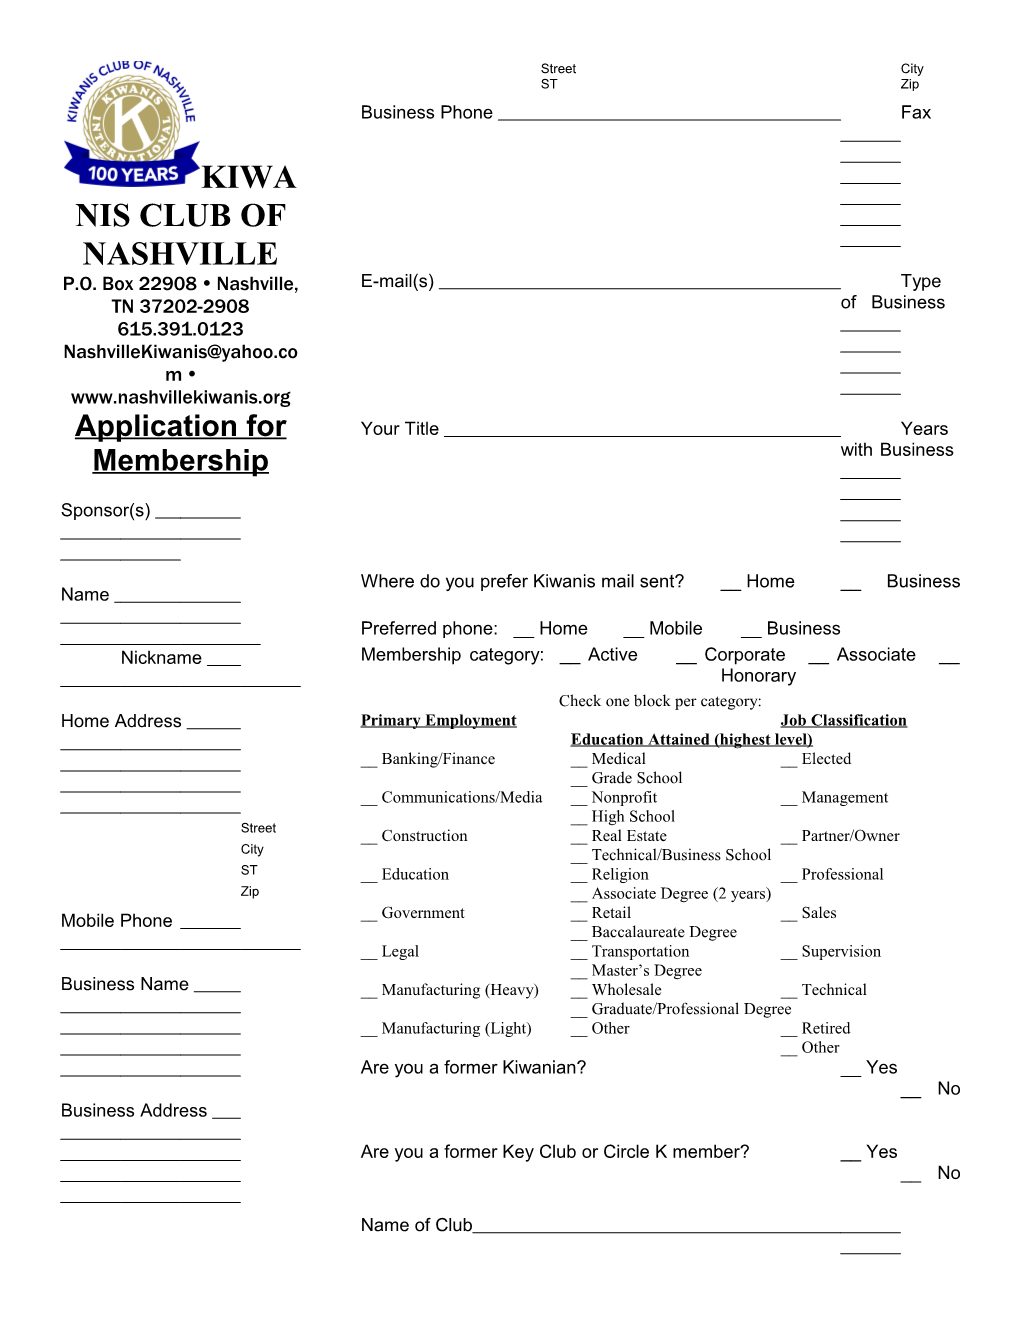 Application for Membership s18